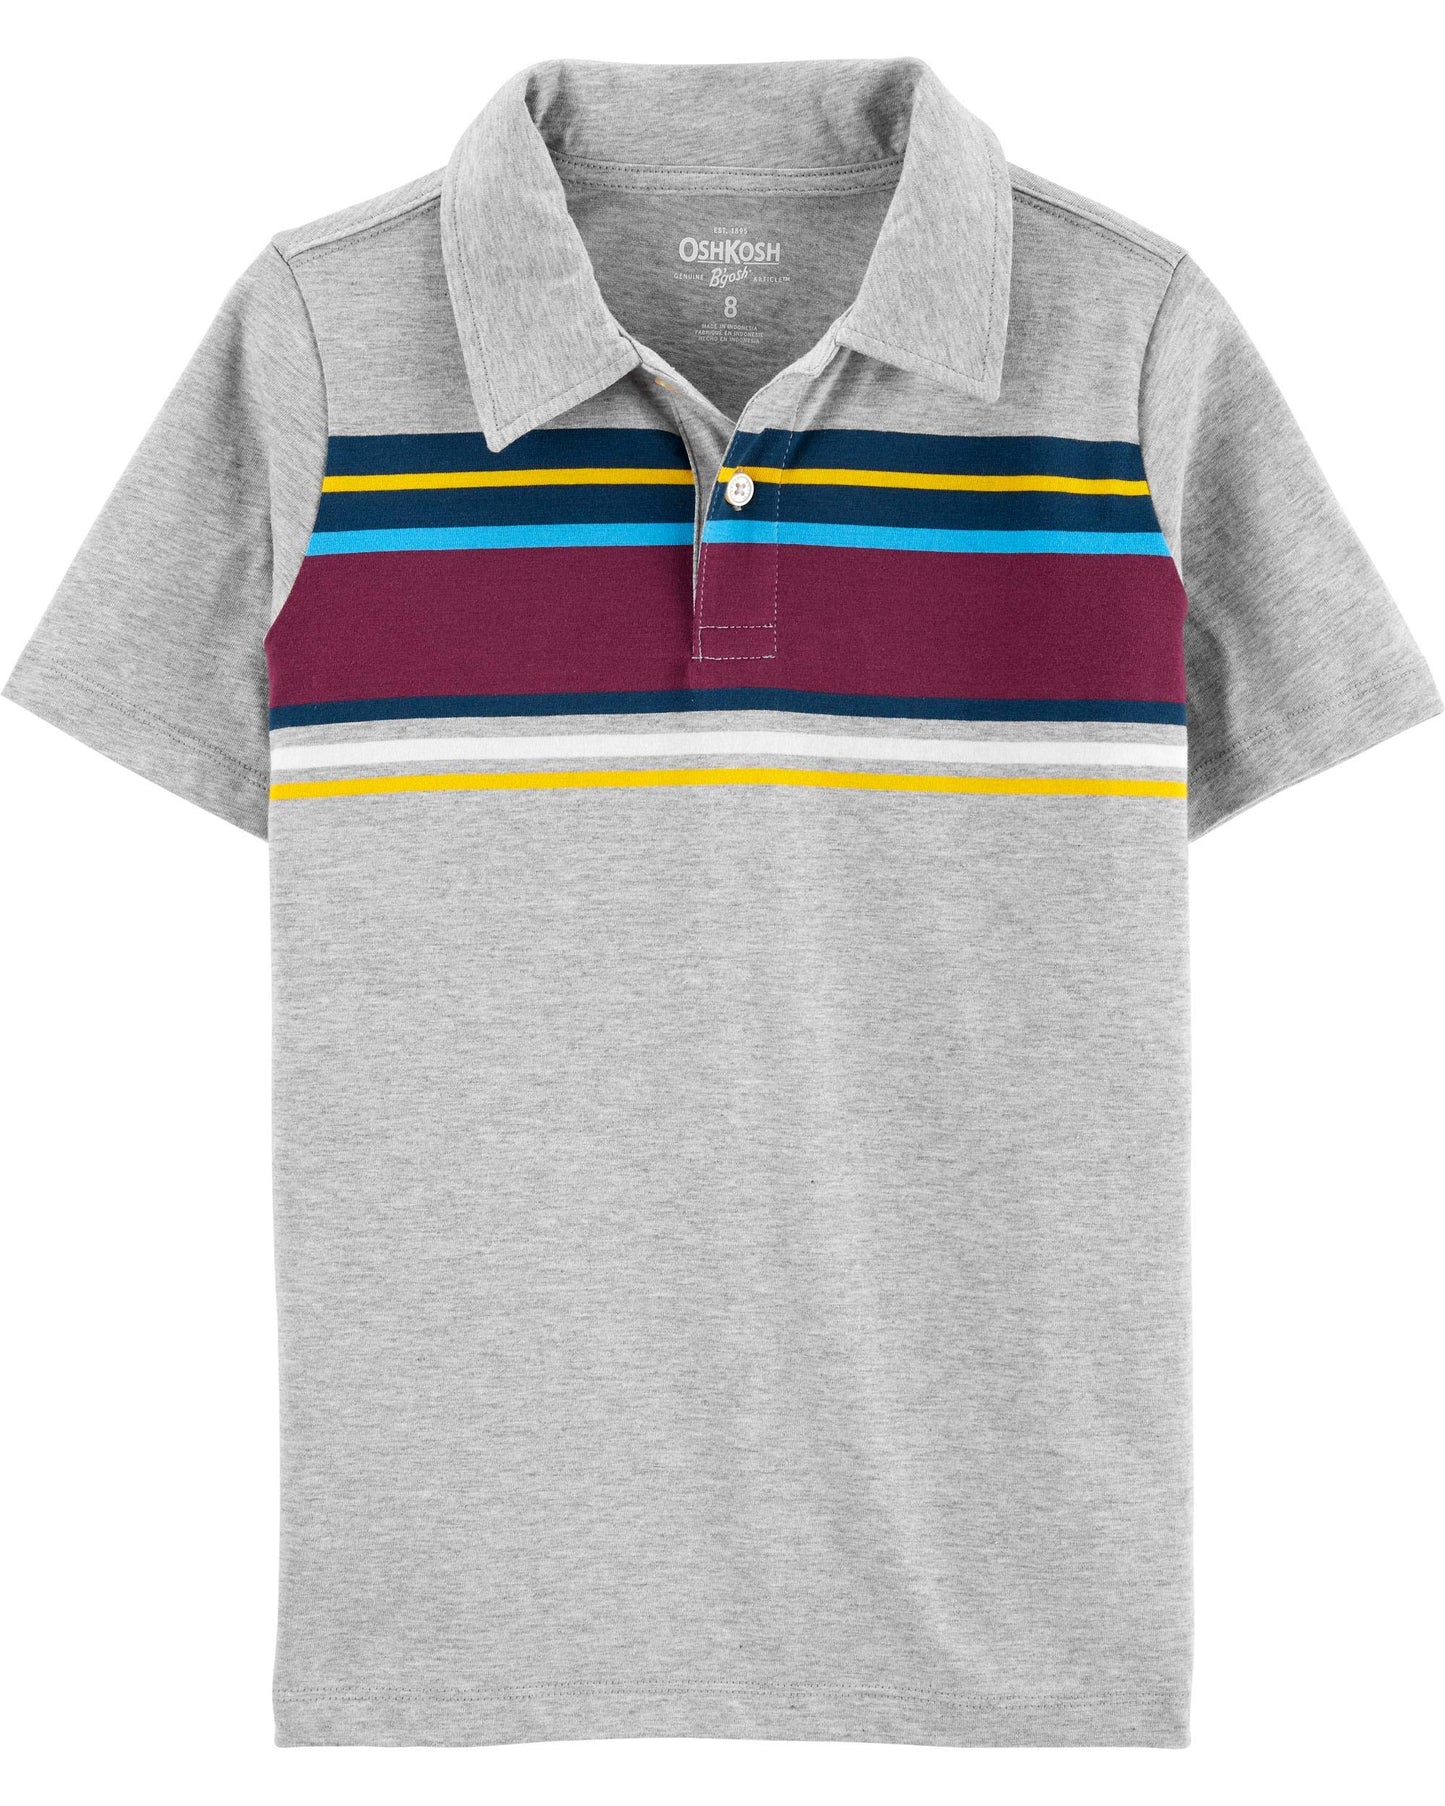 Osh Kosh Boys' Short-Sleeve Polo Shirt, Grey Heather, 5